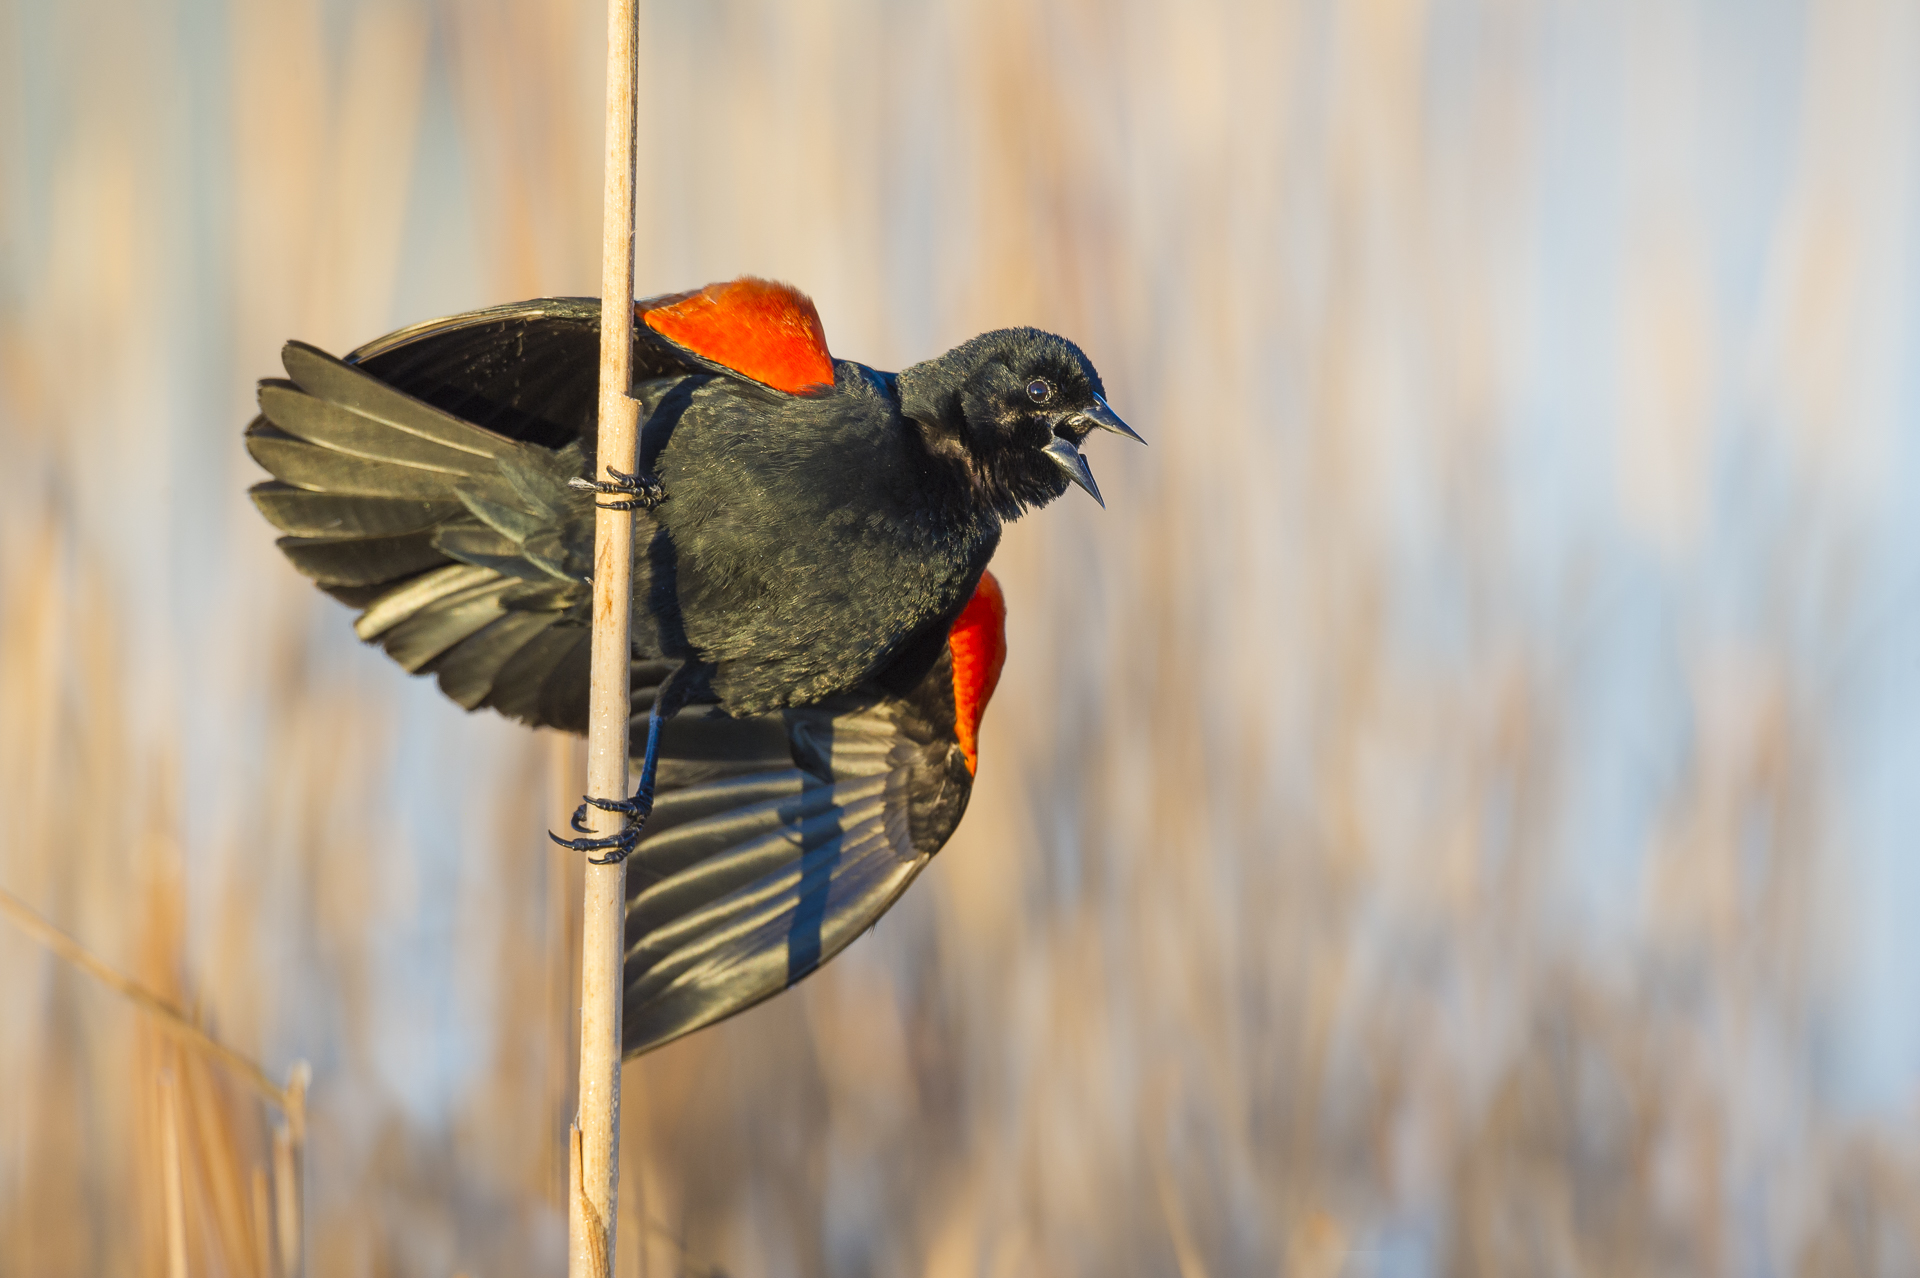 Male red-winged blackbird in full territorial display.